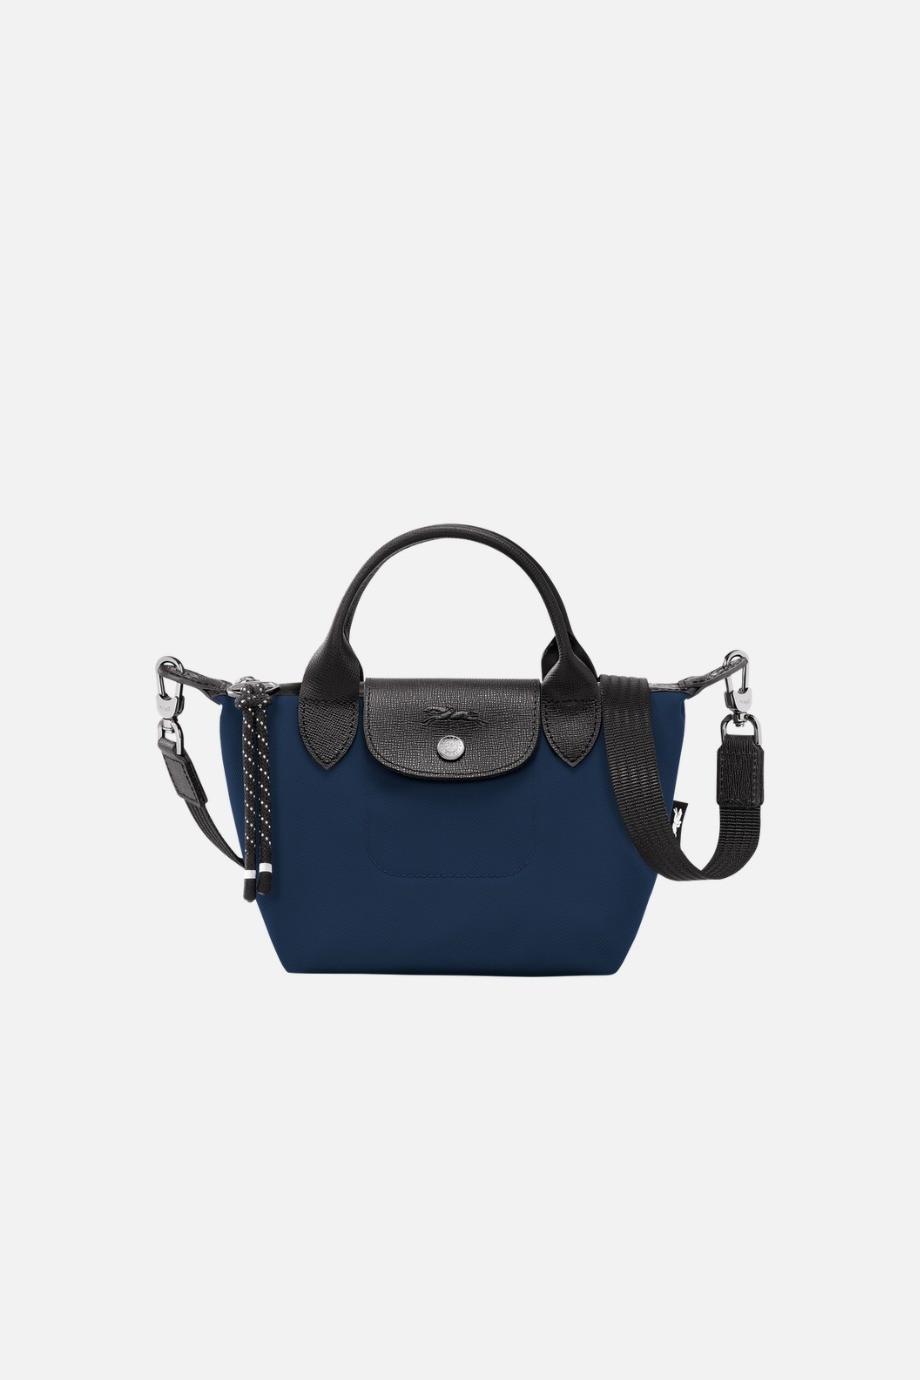 Longchamp - Le Pliage Energy XS Handbag - Navy